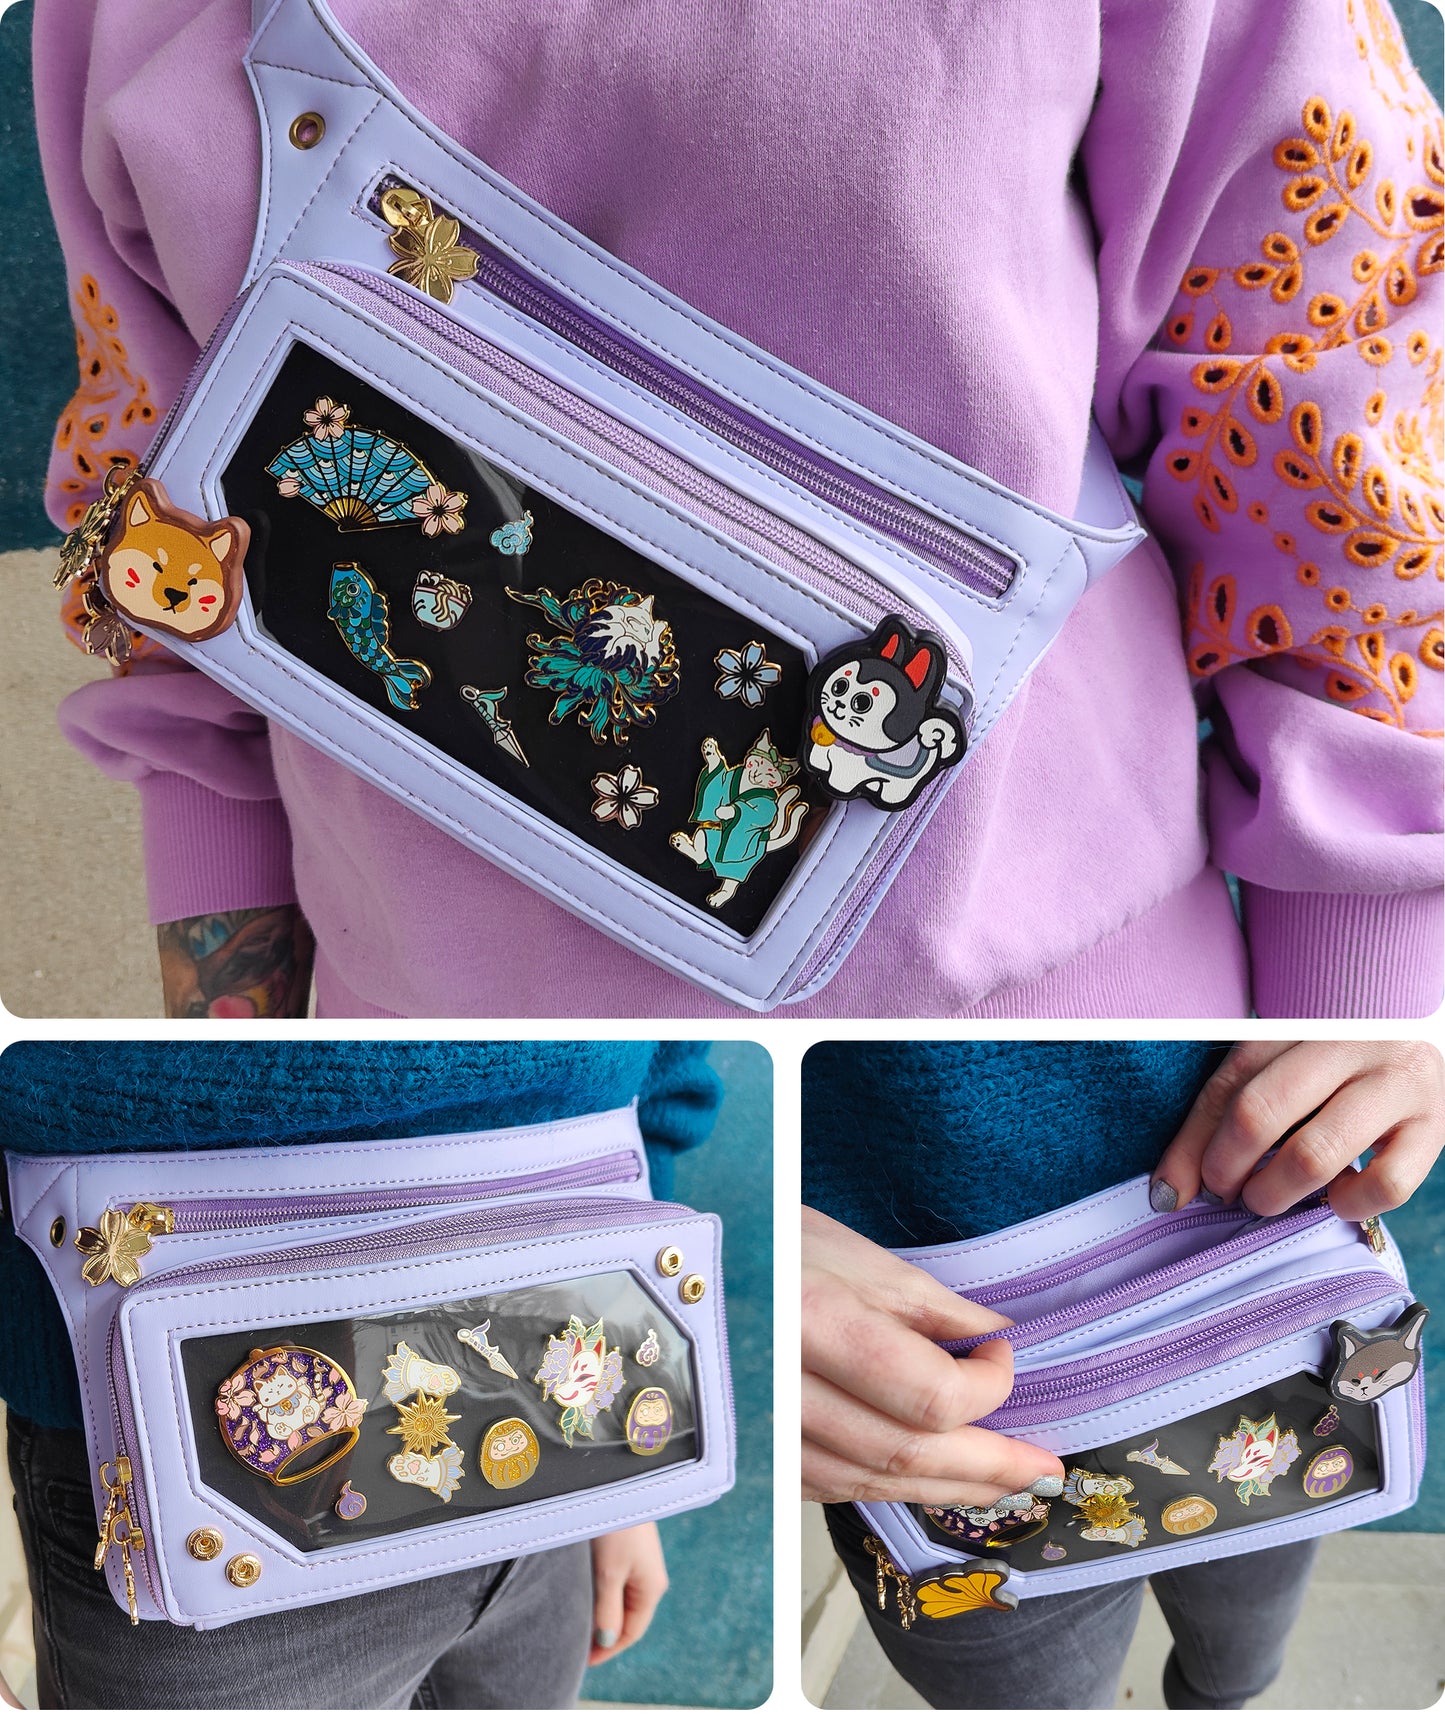 ITA Bag - Customizable fanny pack for pin lovers [KICKSTARTER PRE ORDER]